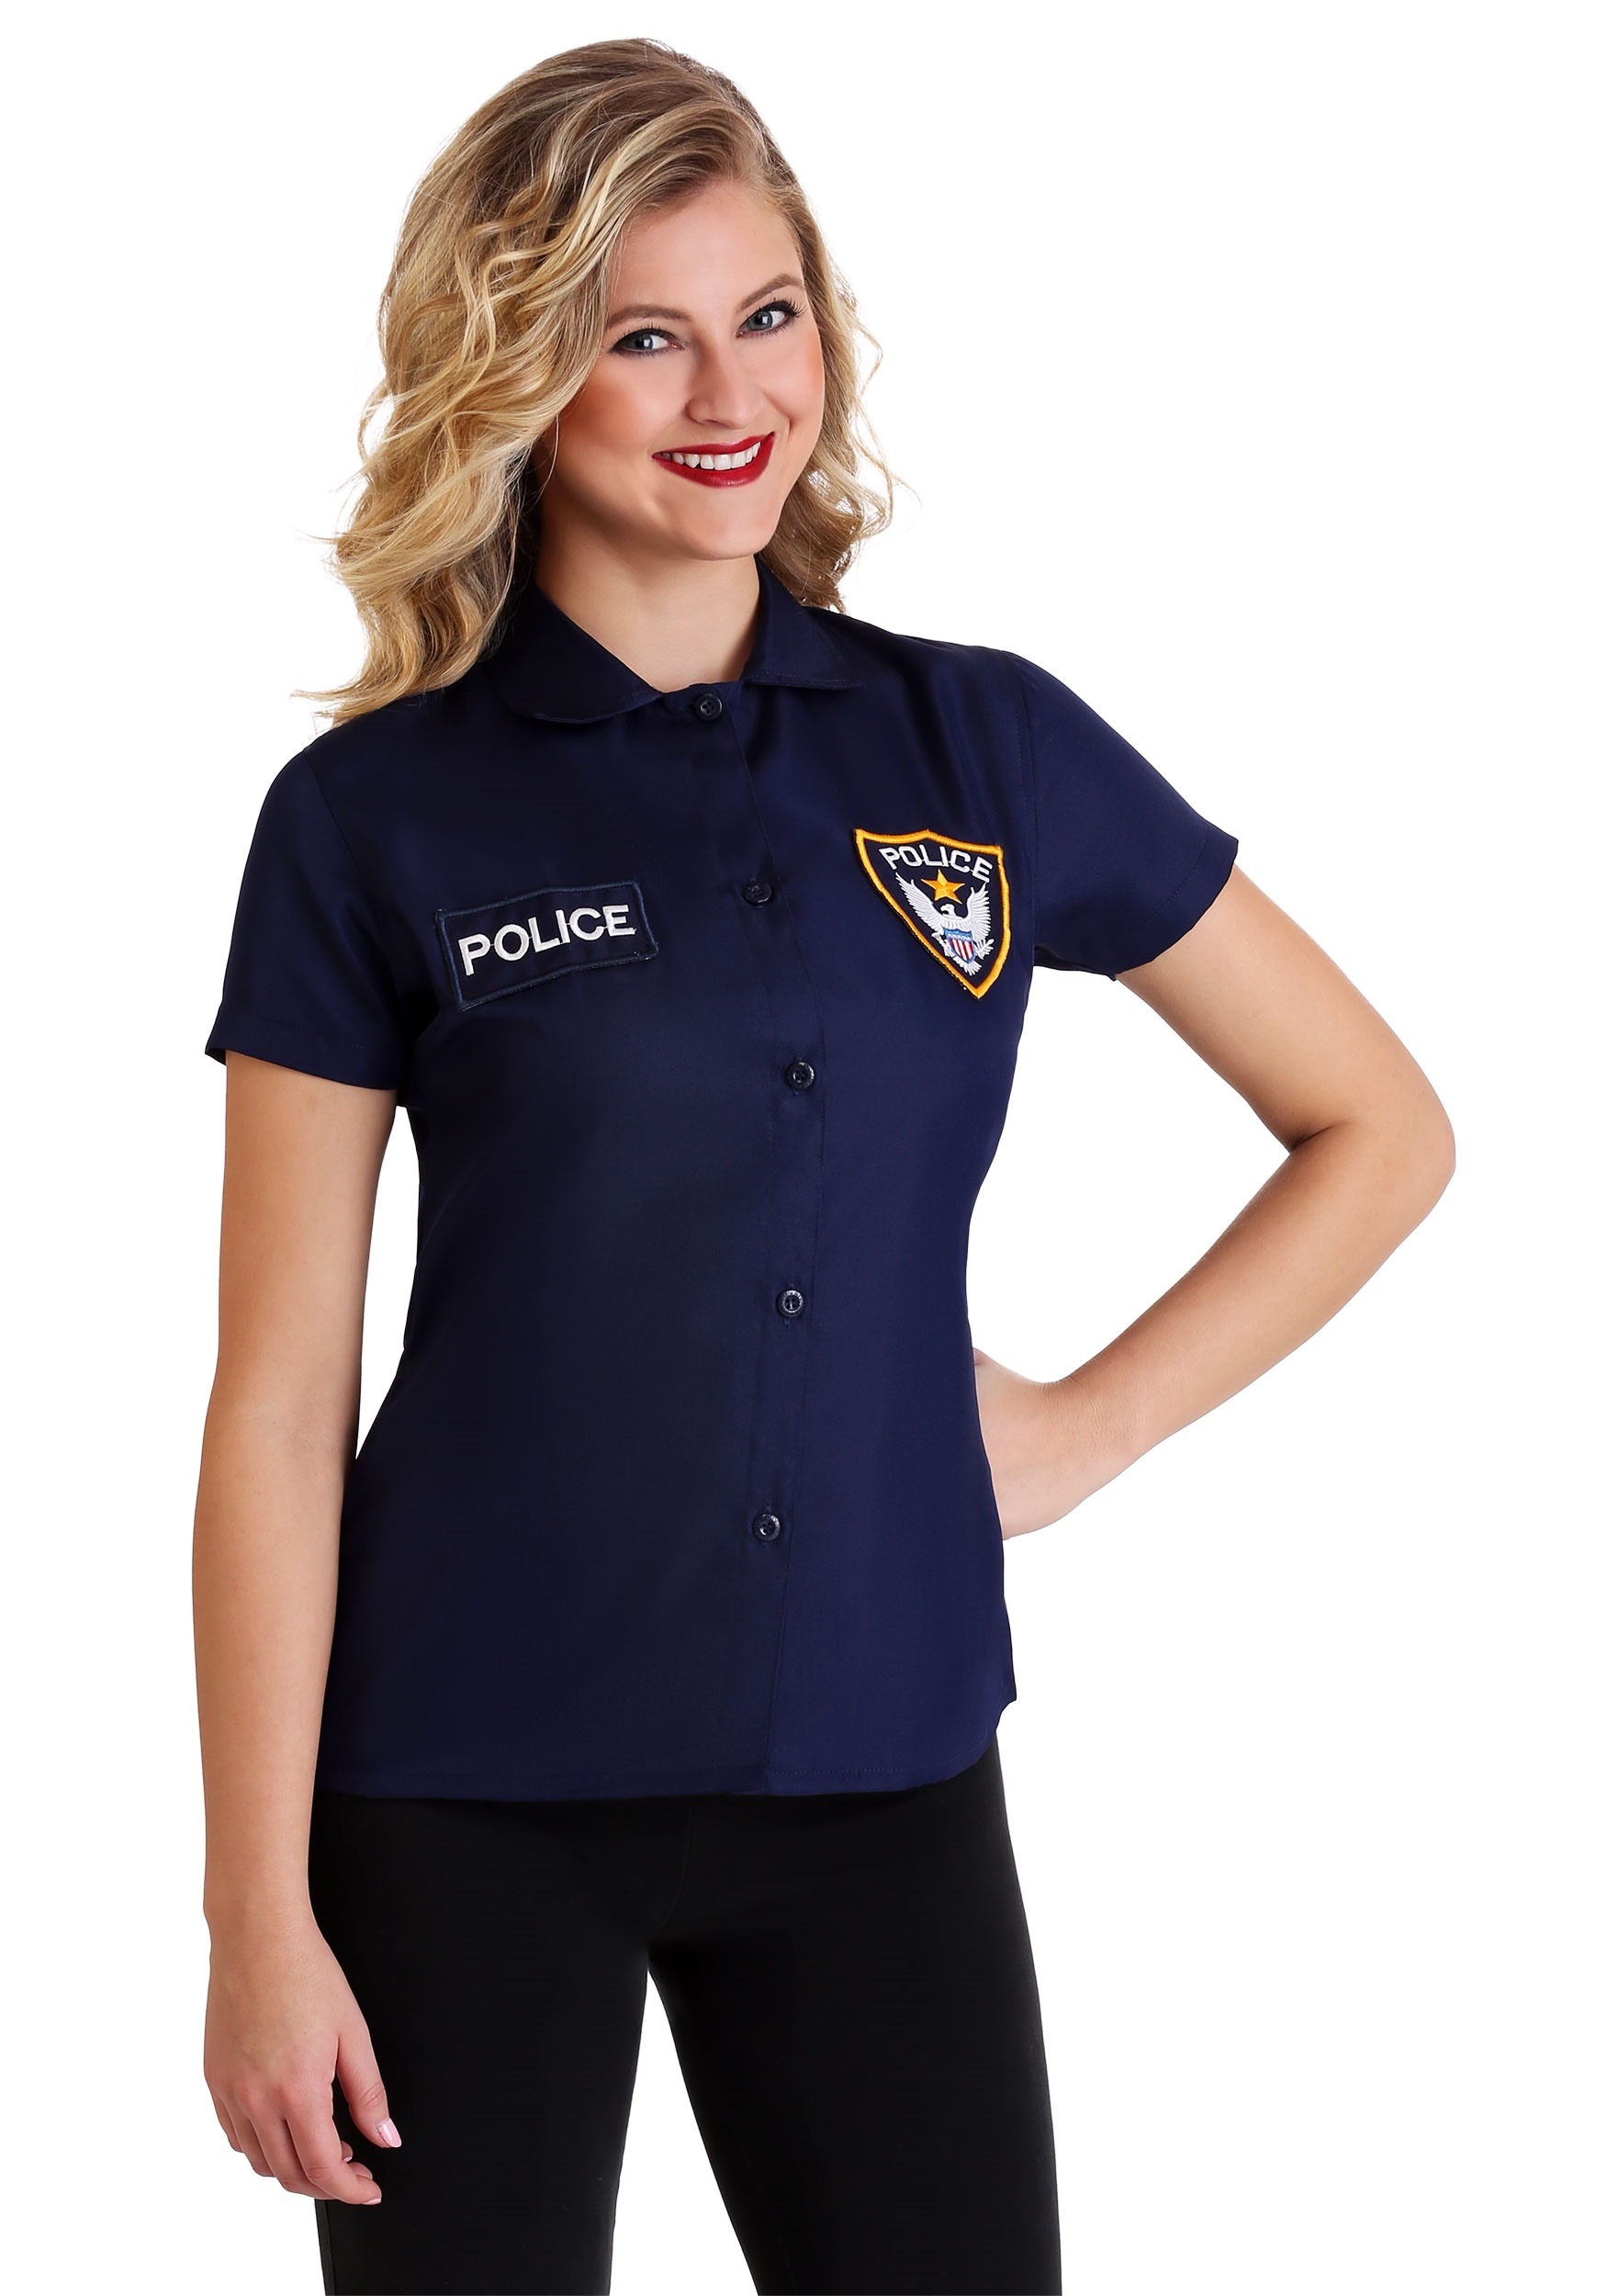 Police Shirt Women's